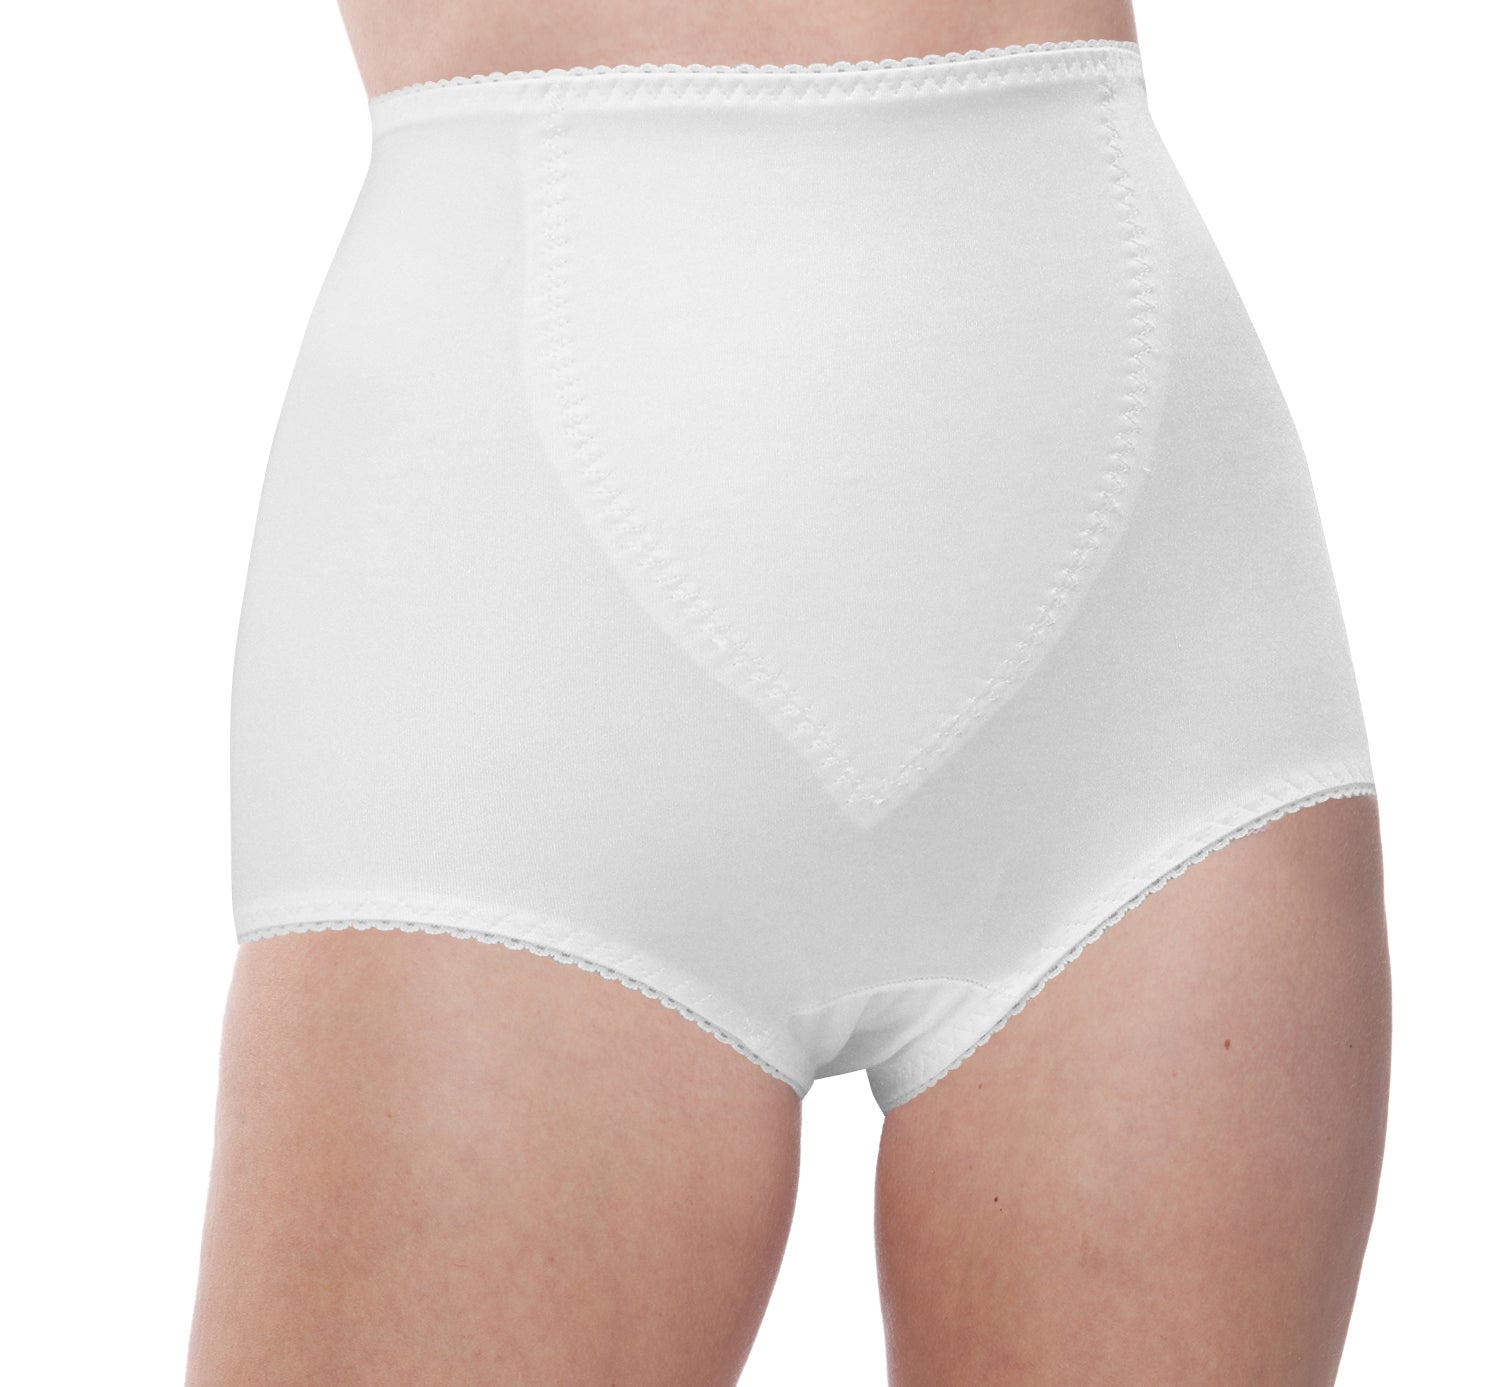 Ladies Fashion Microfiber & Lace Panty - China Underwear and Panty